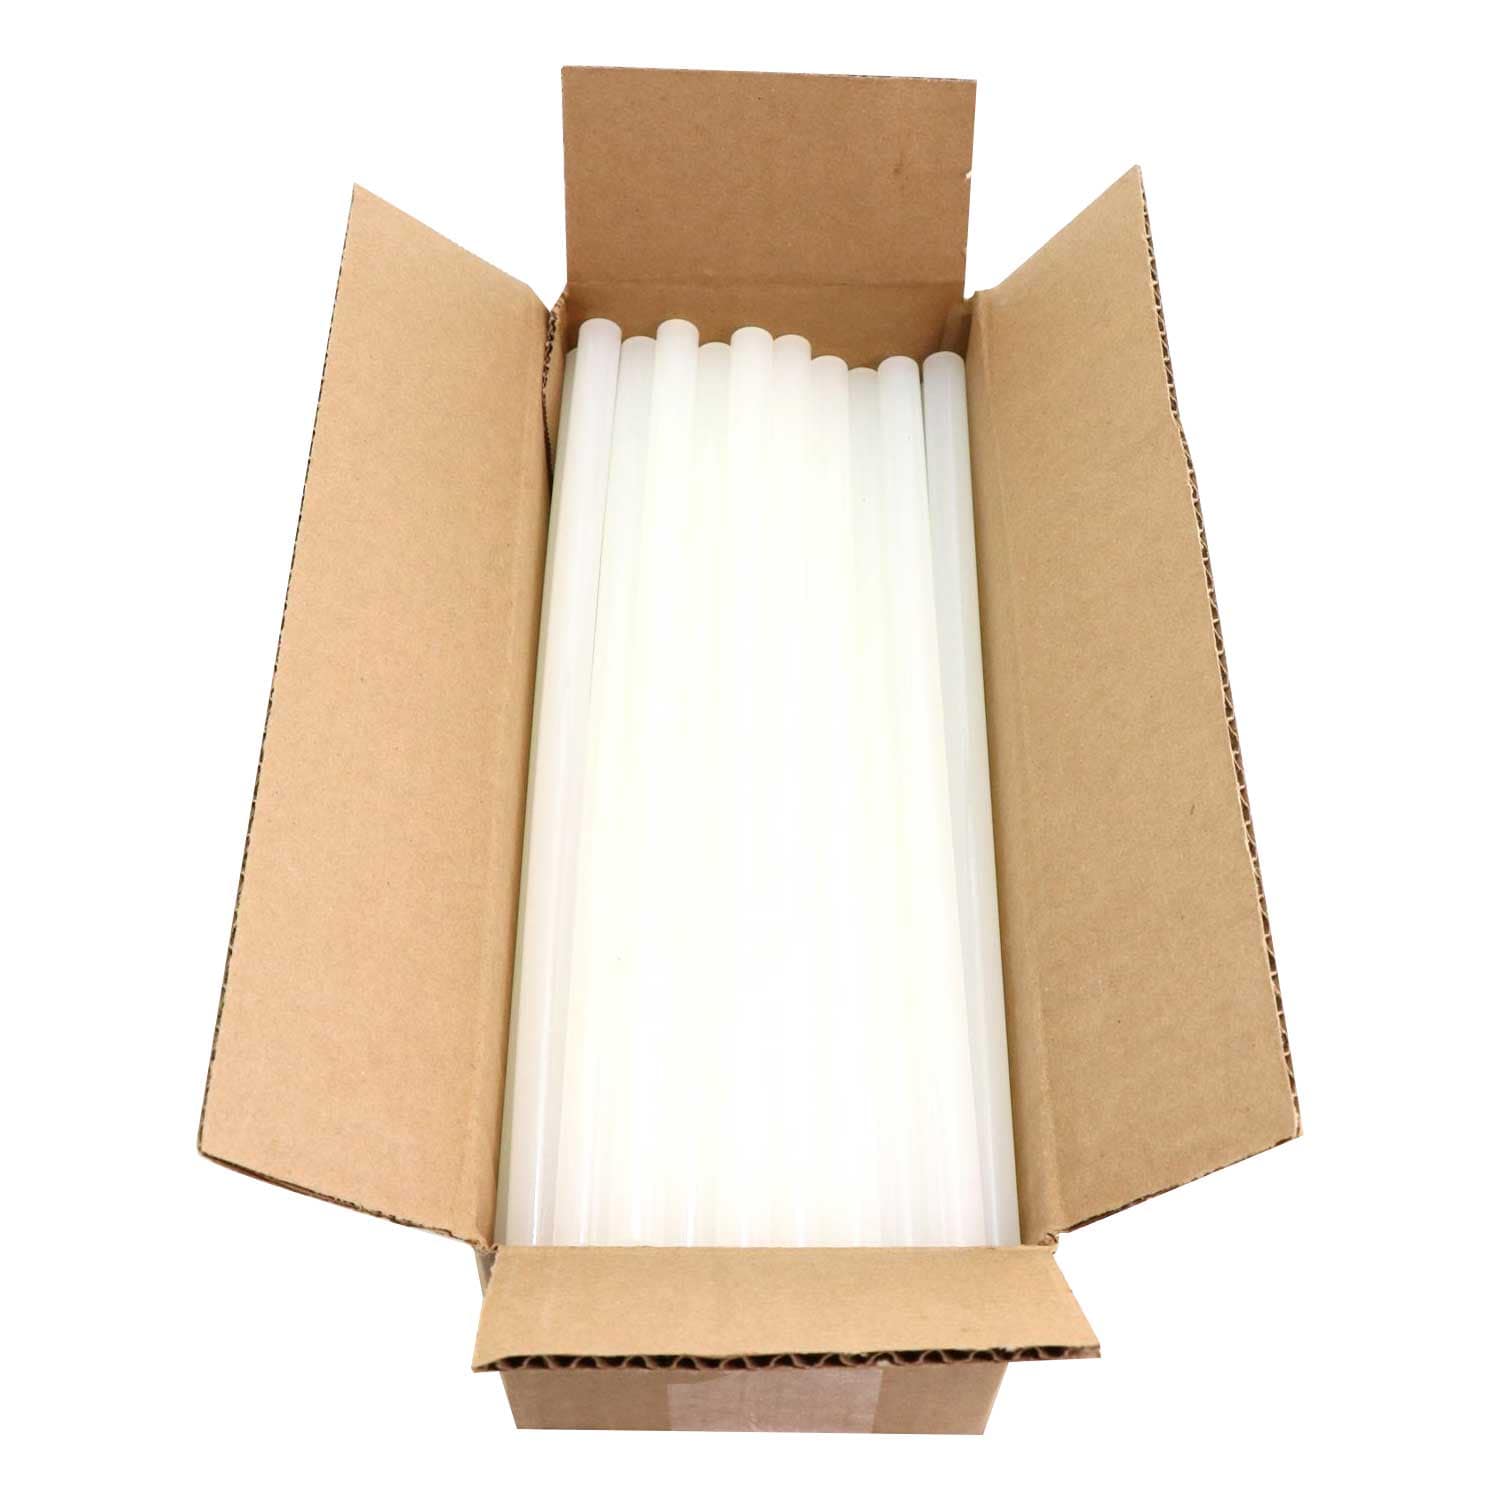 725R510 Full Size 10 Clear Hot Glue Sticks - 5 lb Box